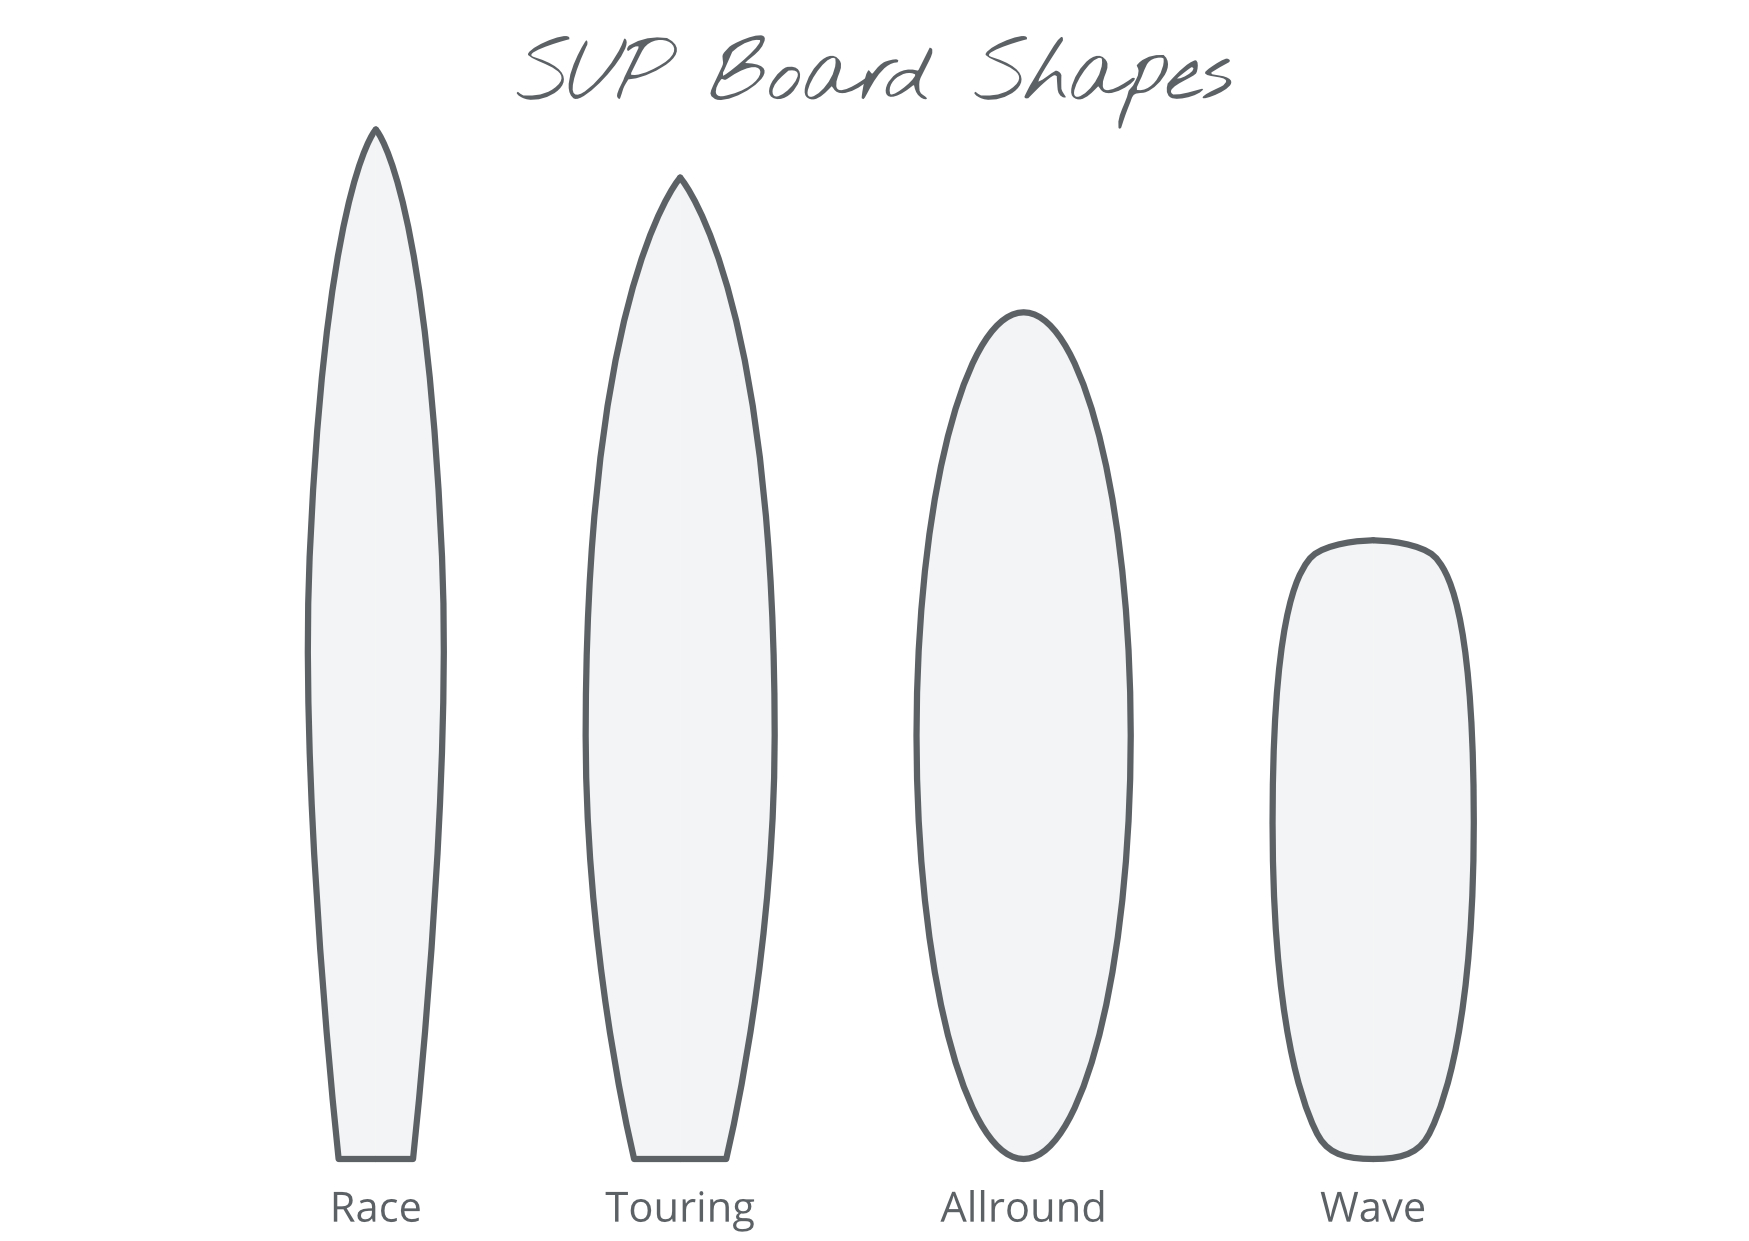 SUP Board Shapes als Grafik dargestellt